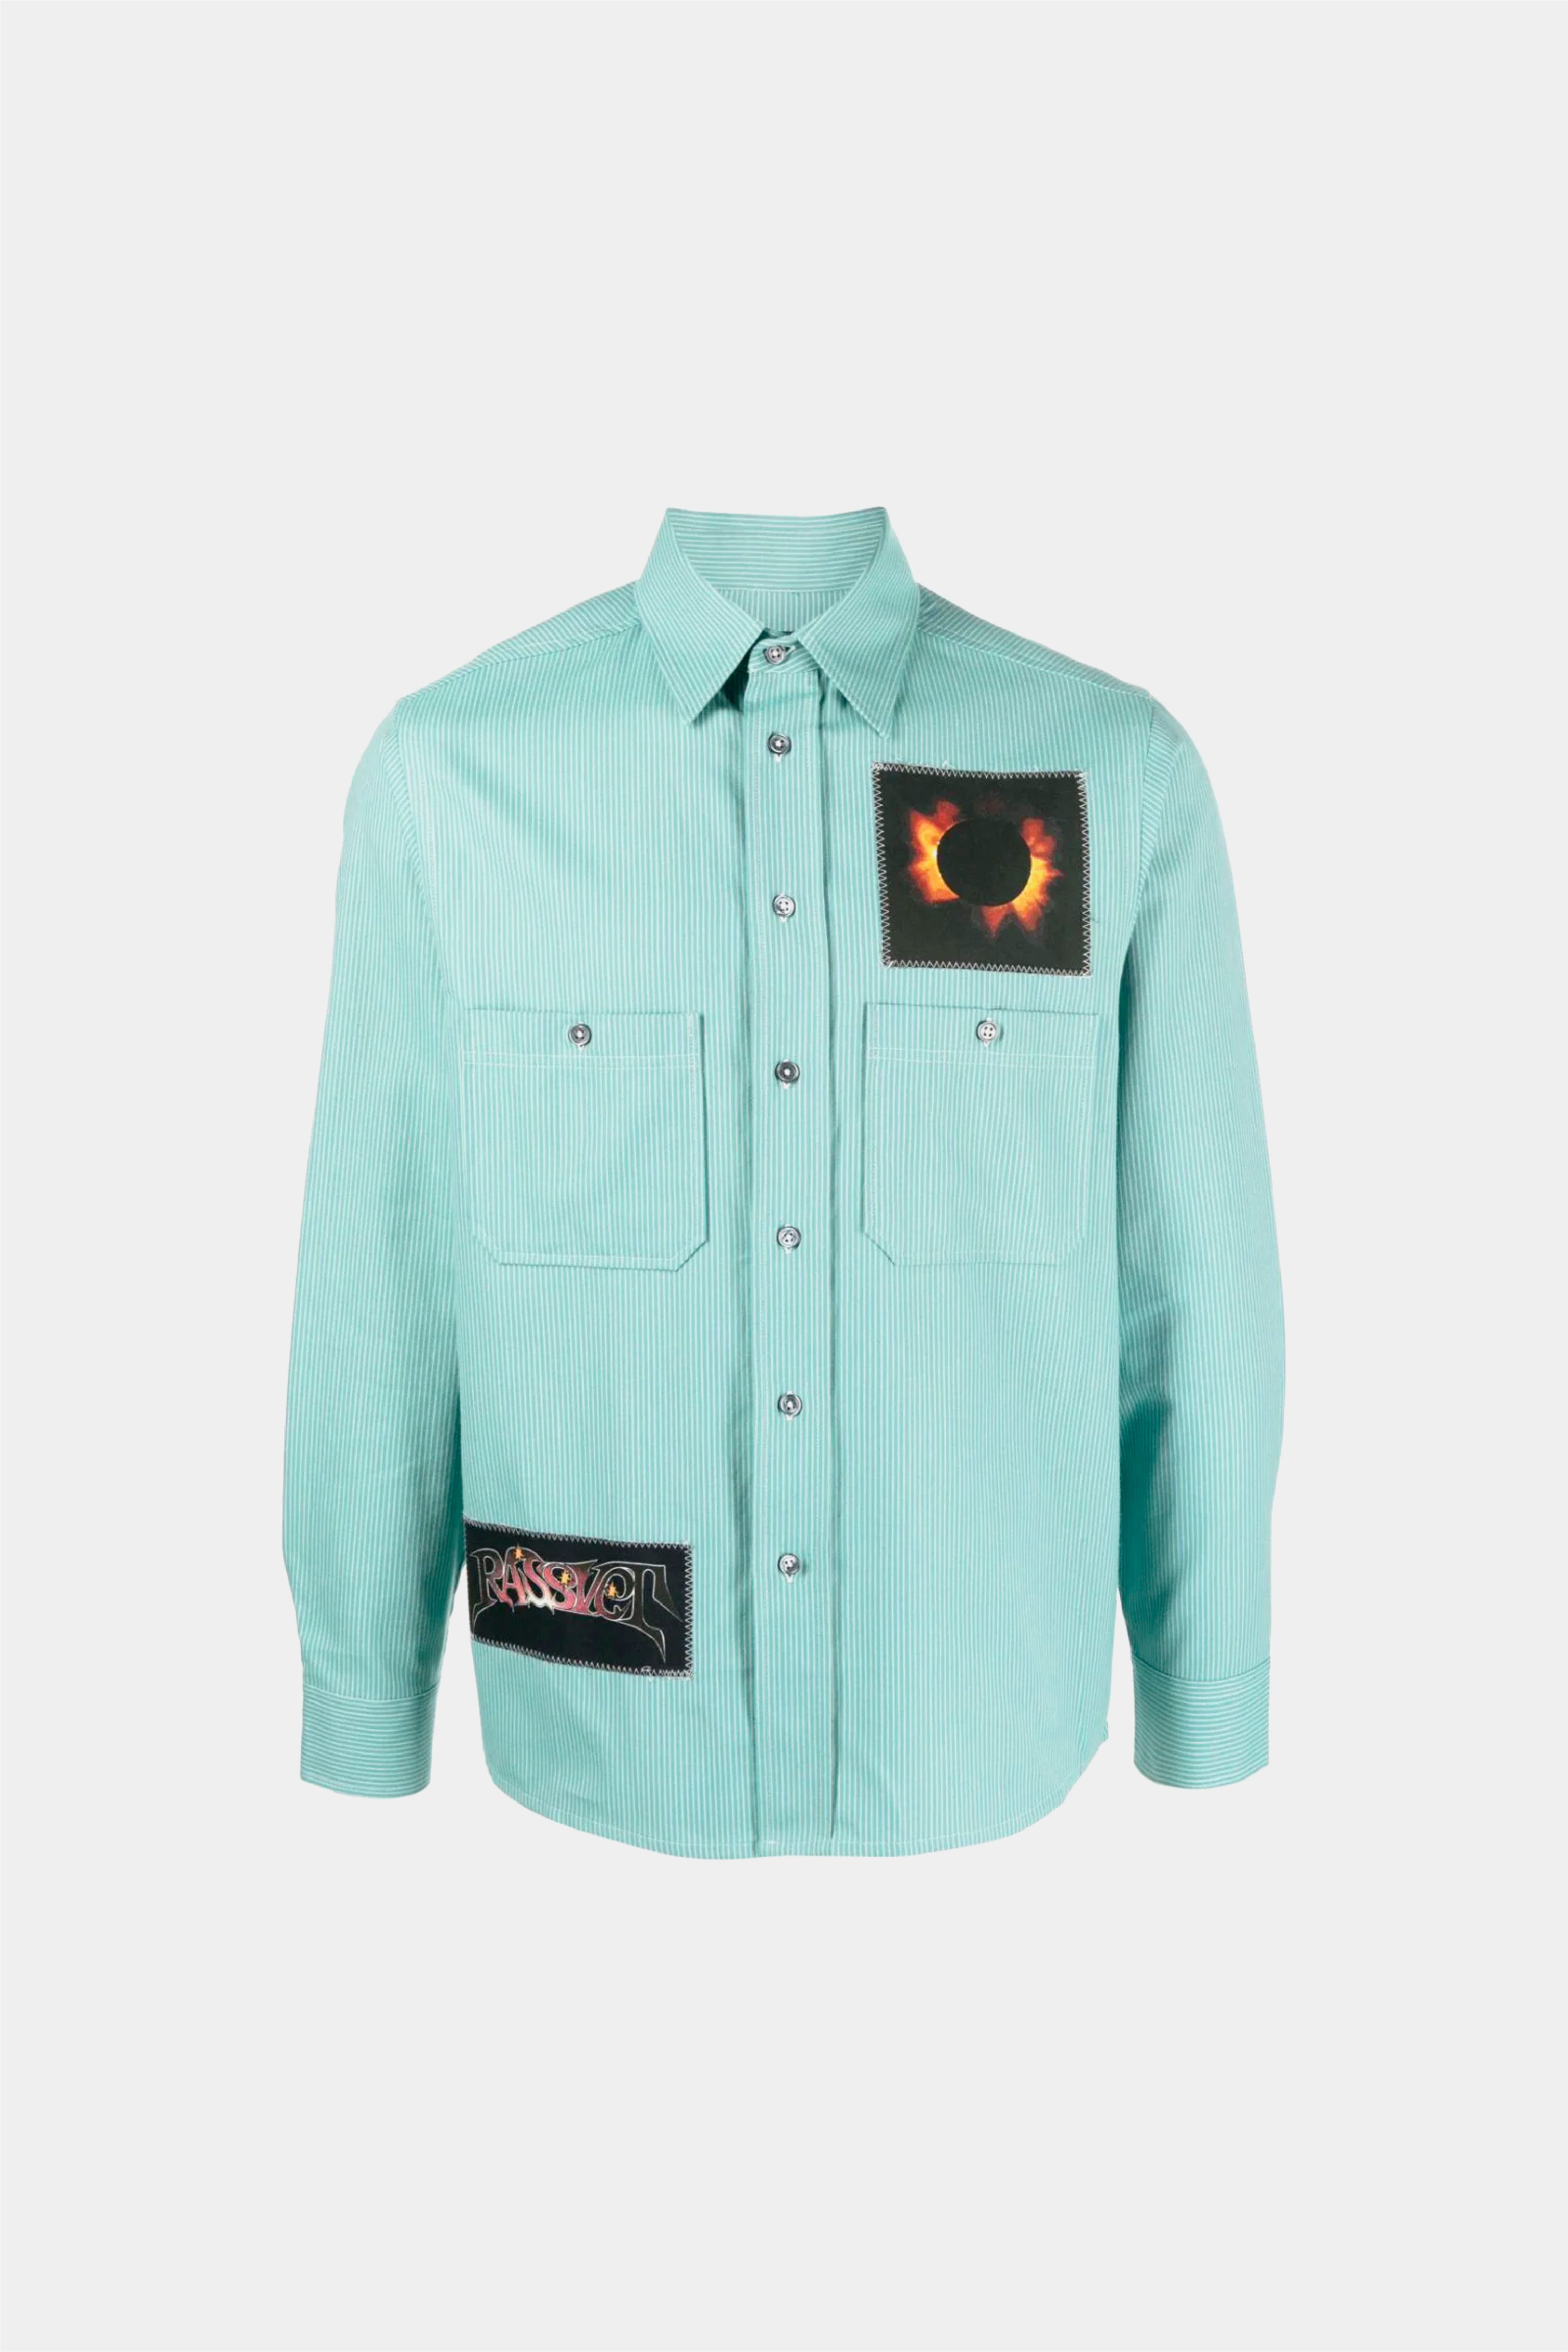 Selectshop FRAME - RASSVET Space Woven Shirt Shirts Concept Store Dubai